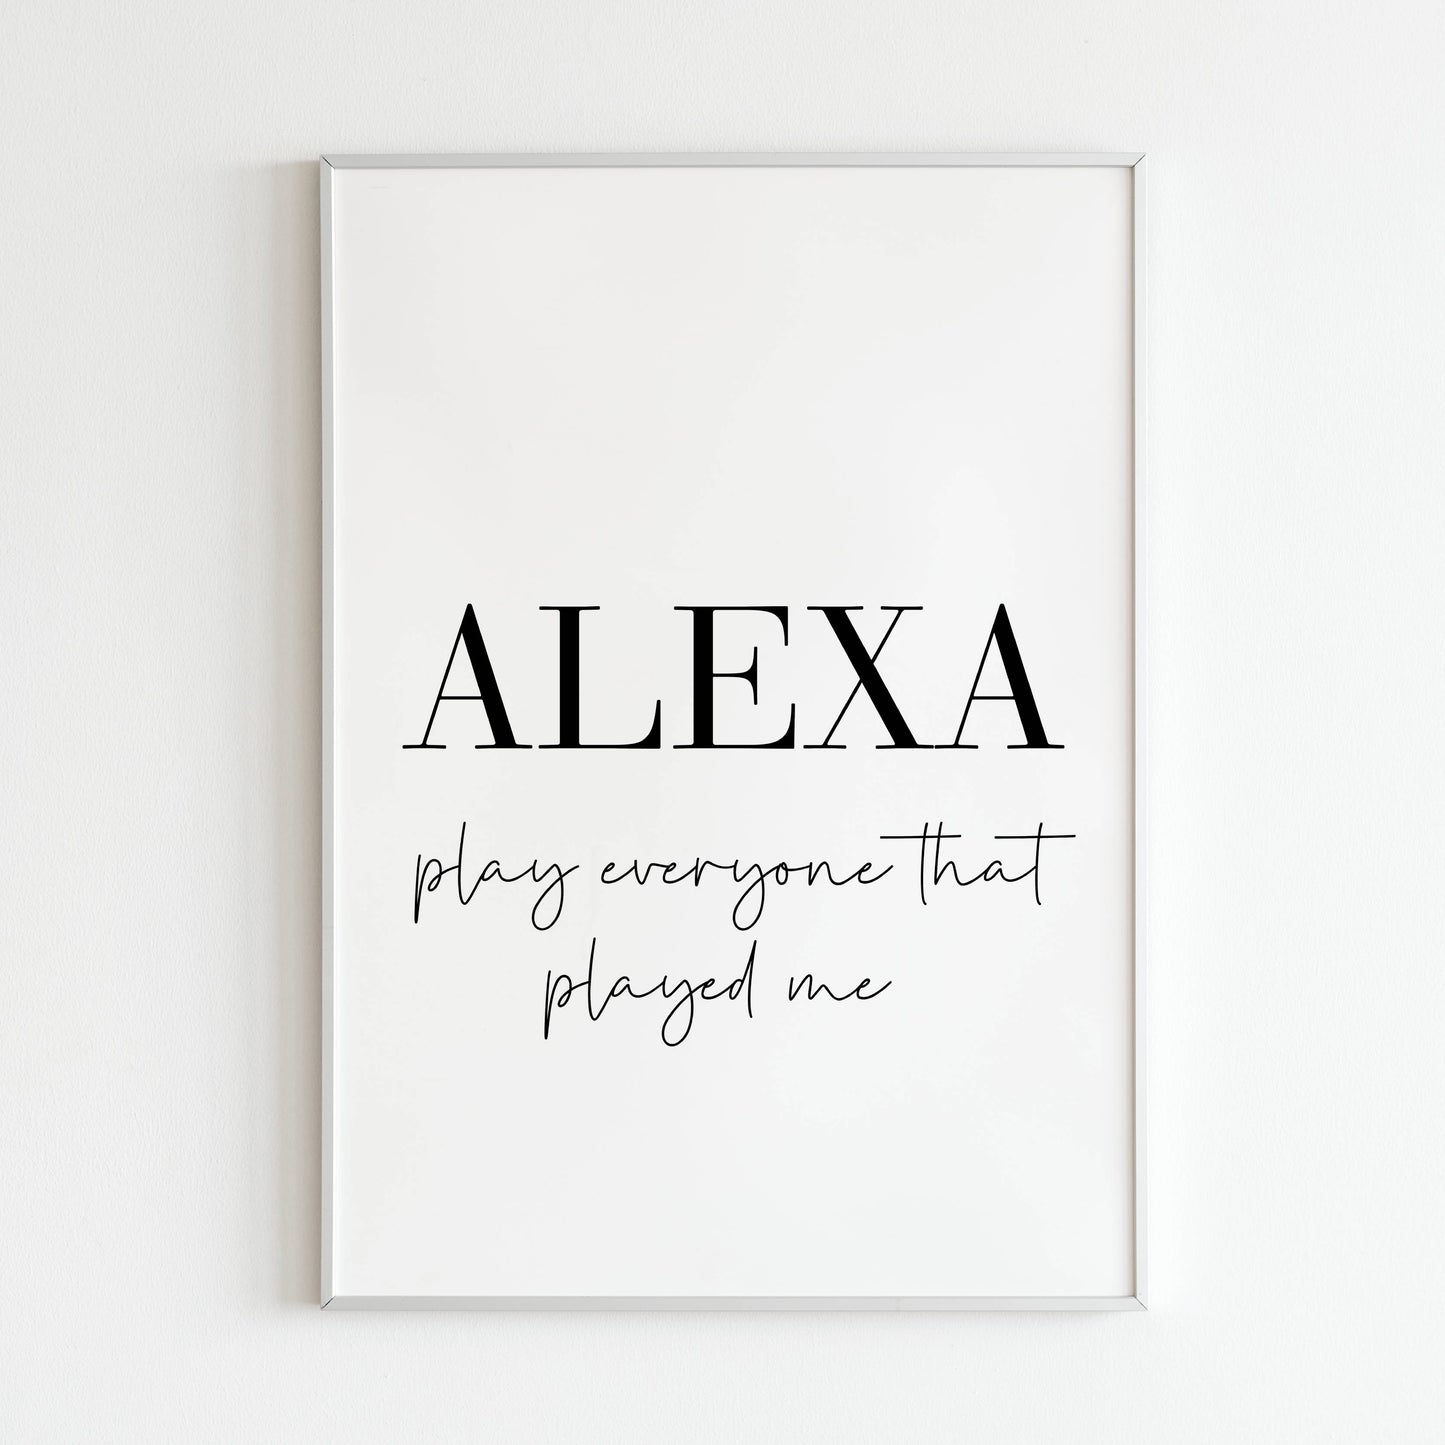 ALEXA, play everyone that played me